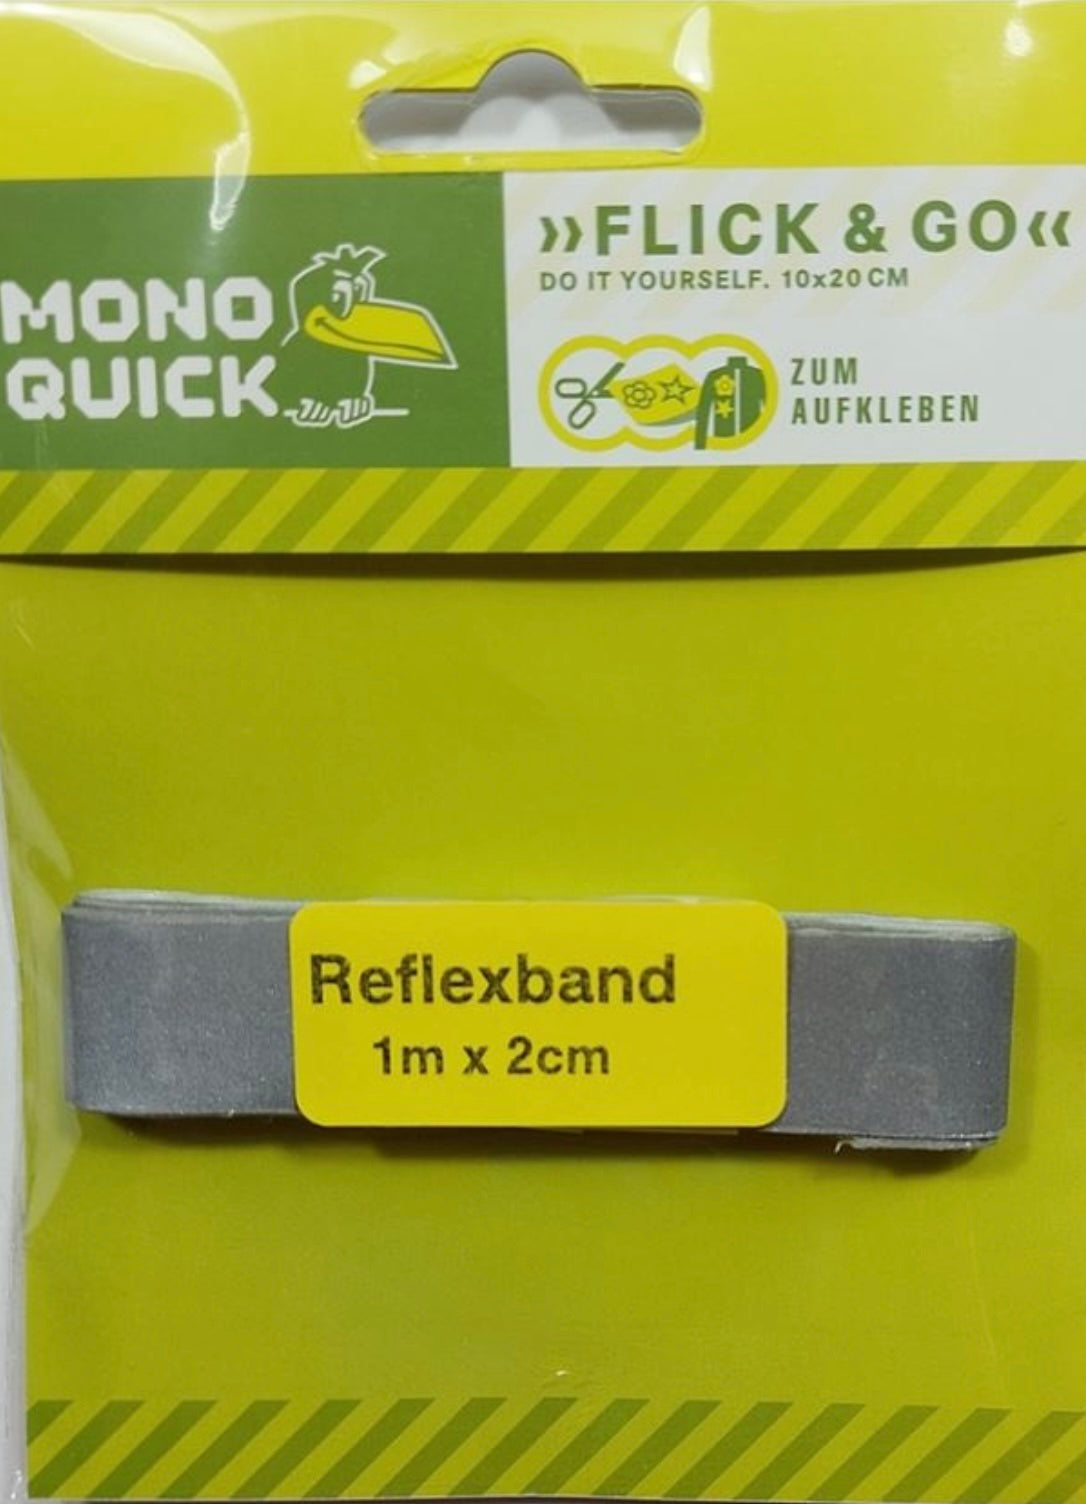 Mono Quick Reflexband selbstklebend
1m x 2cm